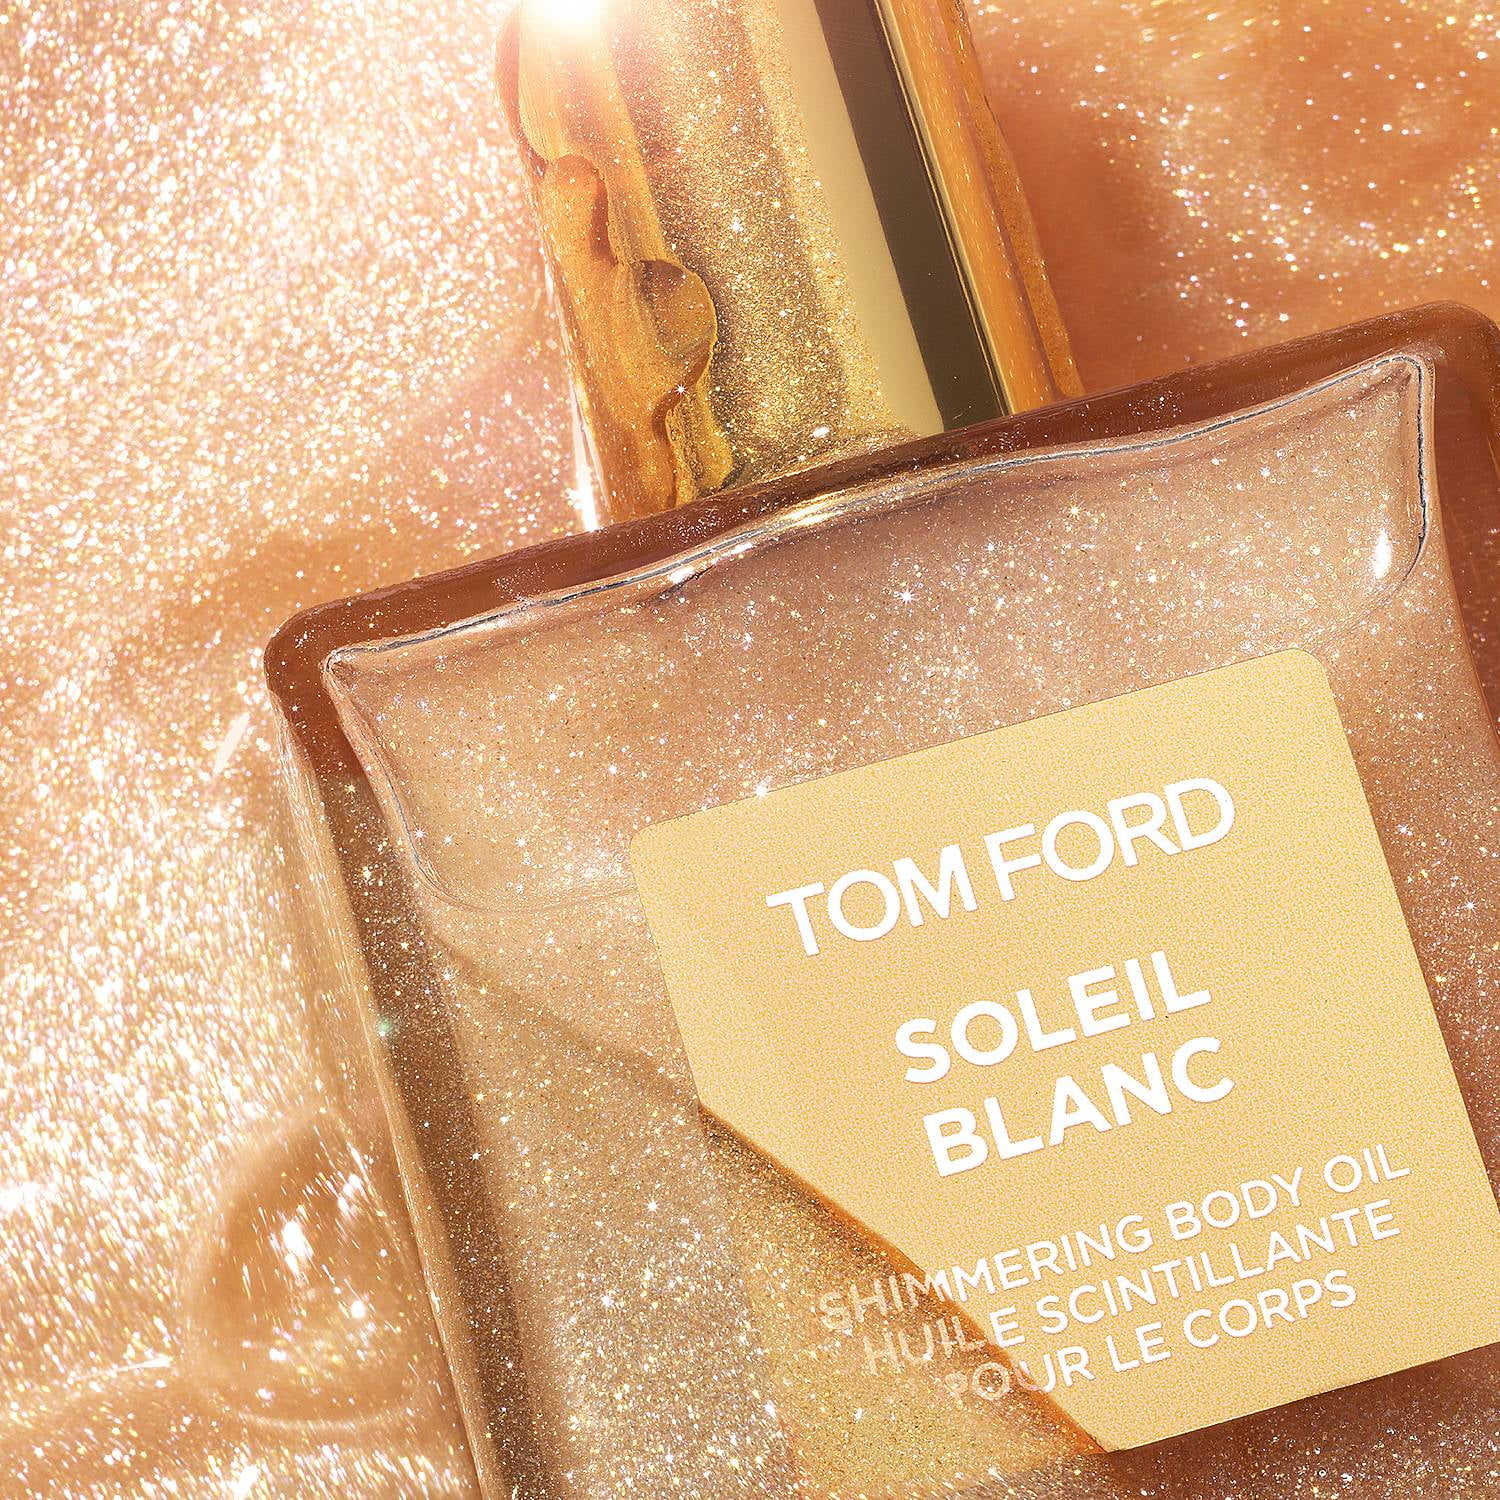 Tom Ford Soleil Blnc Shimmering Body Oil - 3.4 oz - Walmart.com